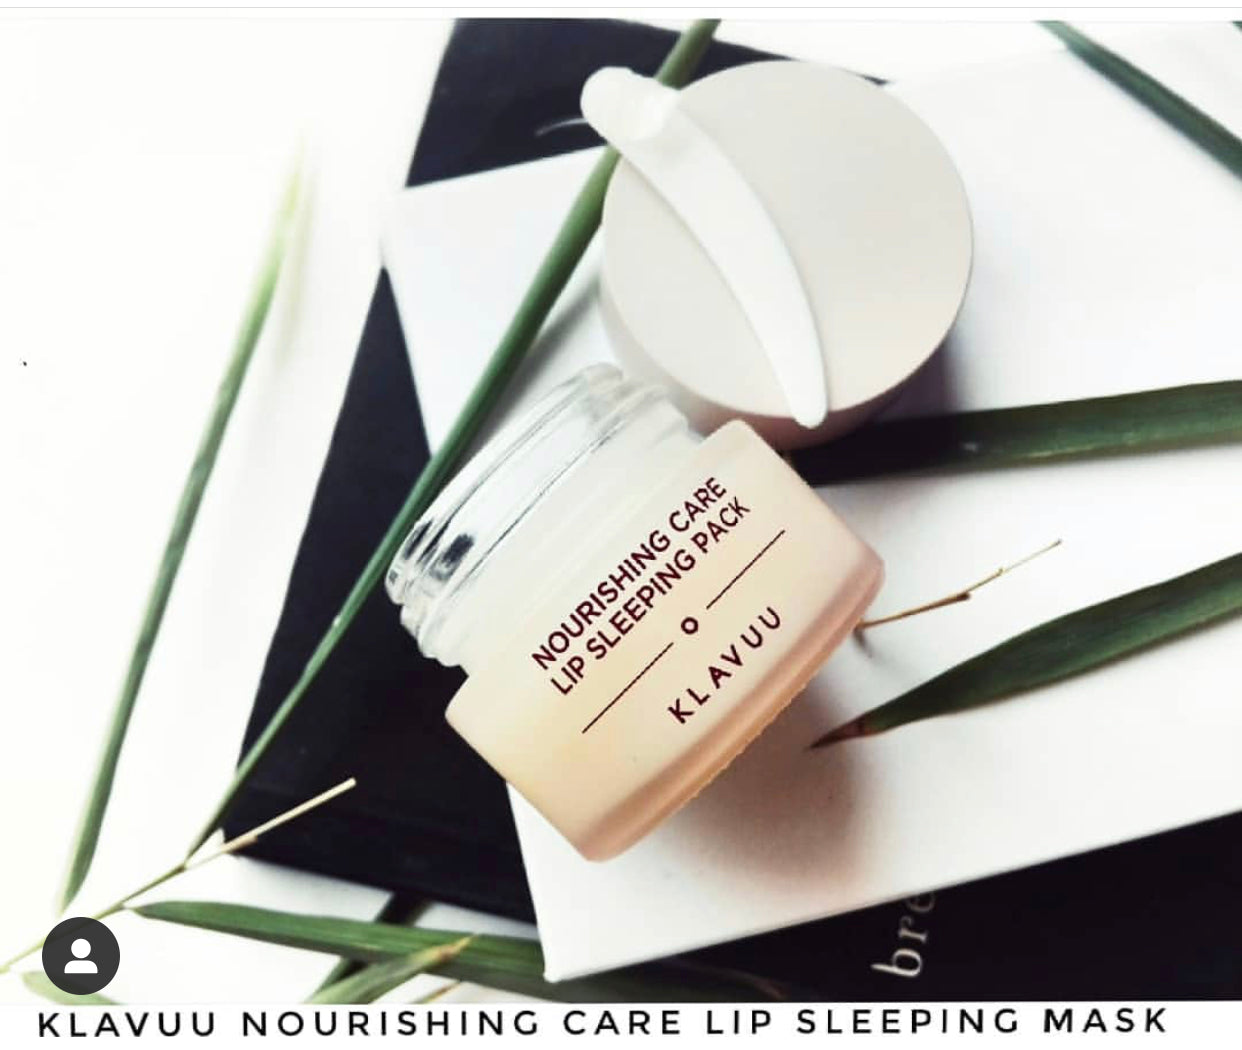 Klavuu Nourishing Care Lip Sleeping Pack review by @farya90